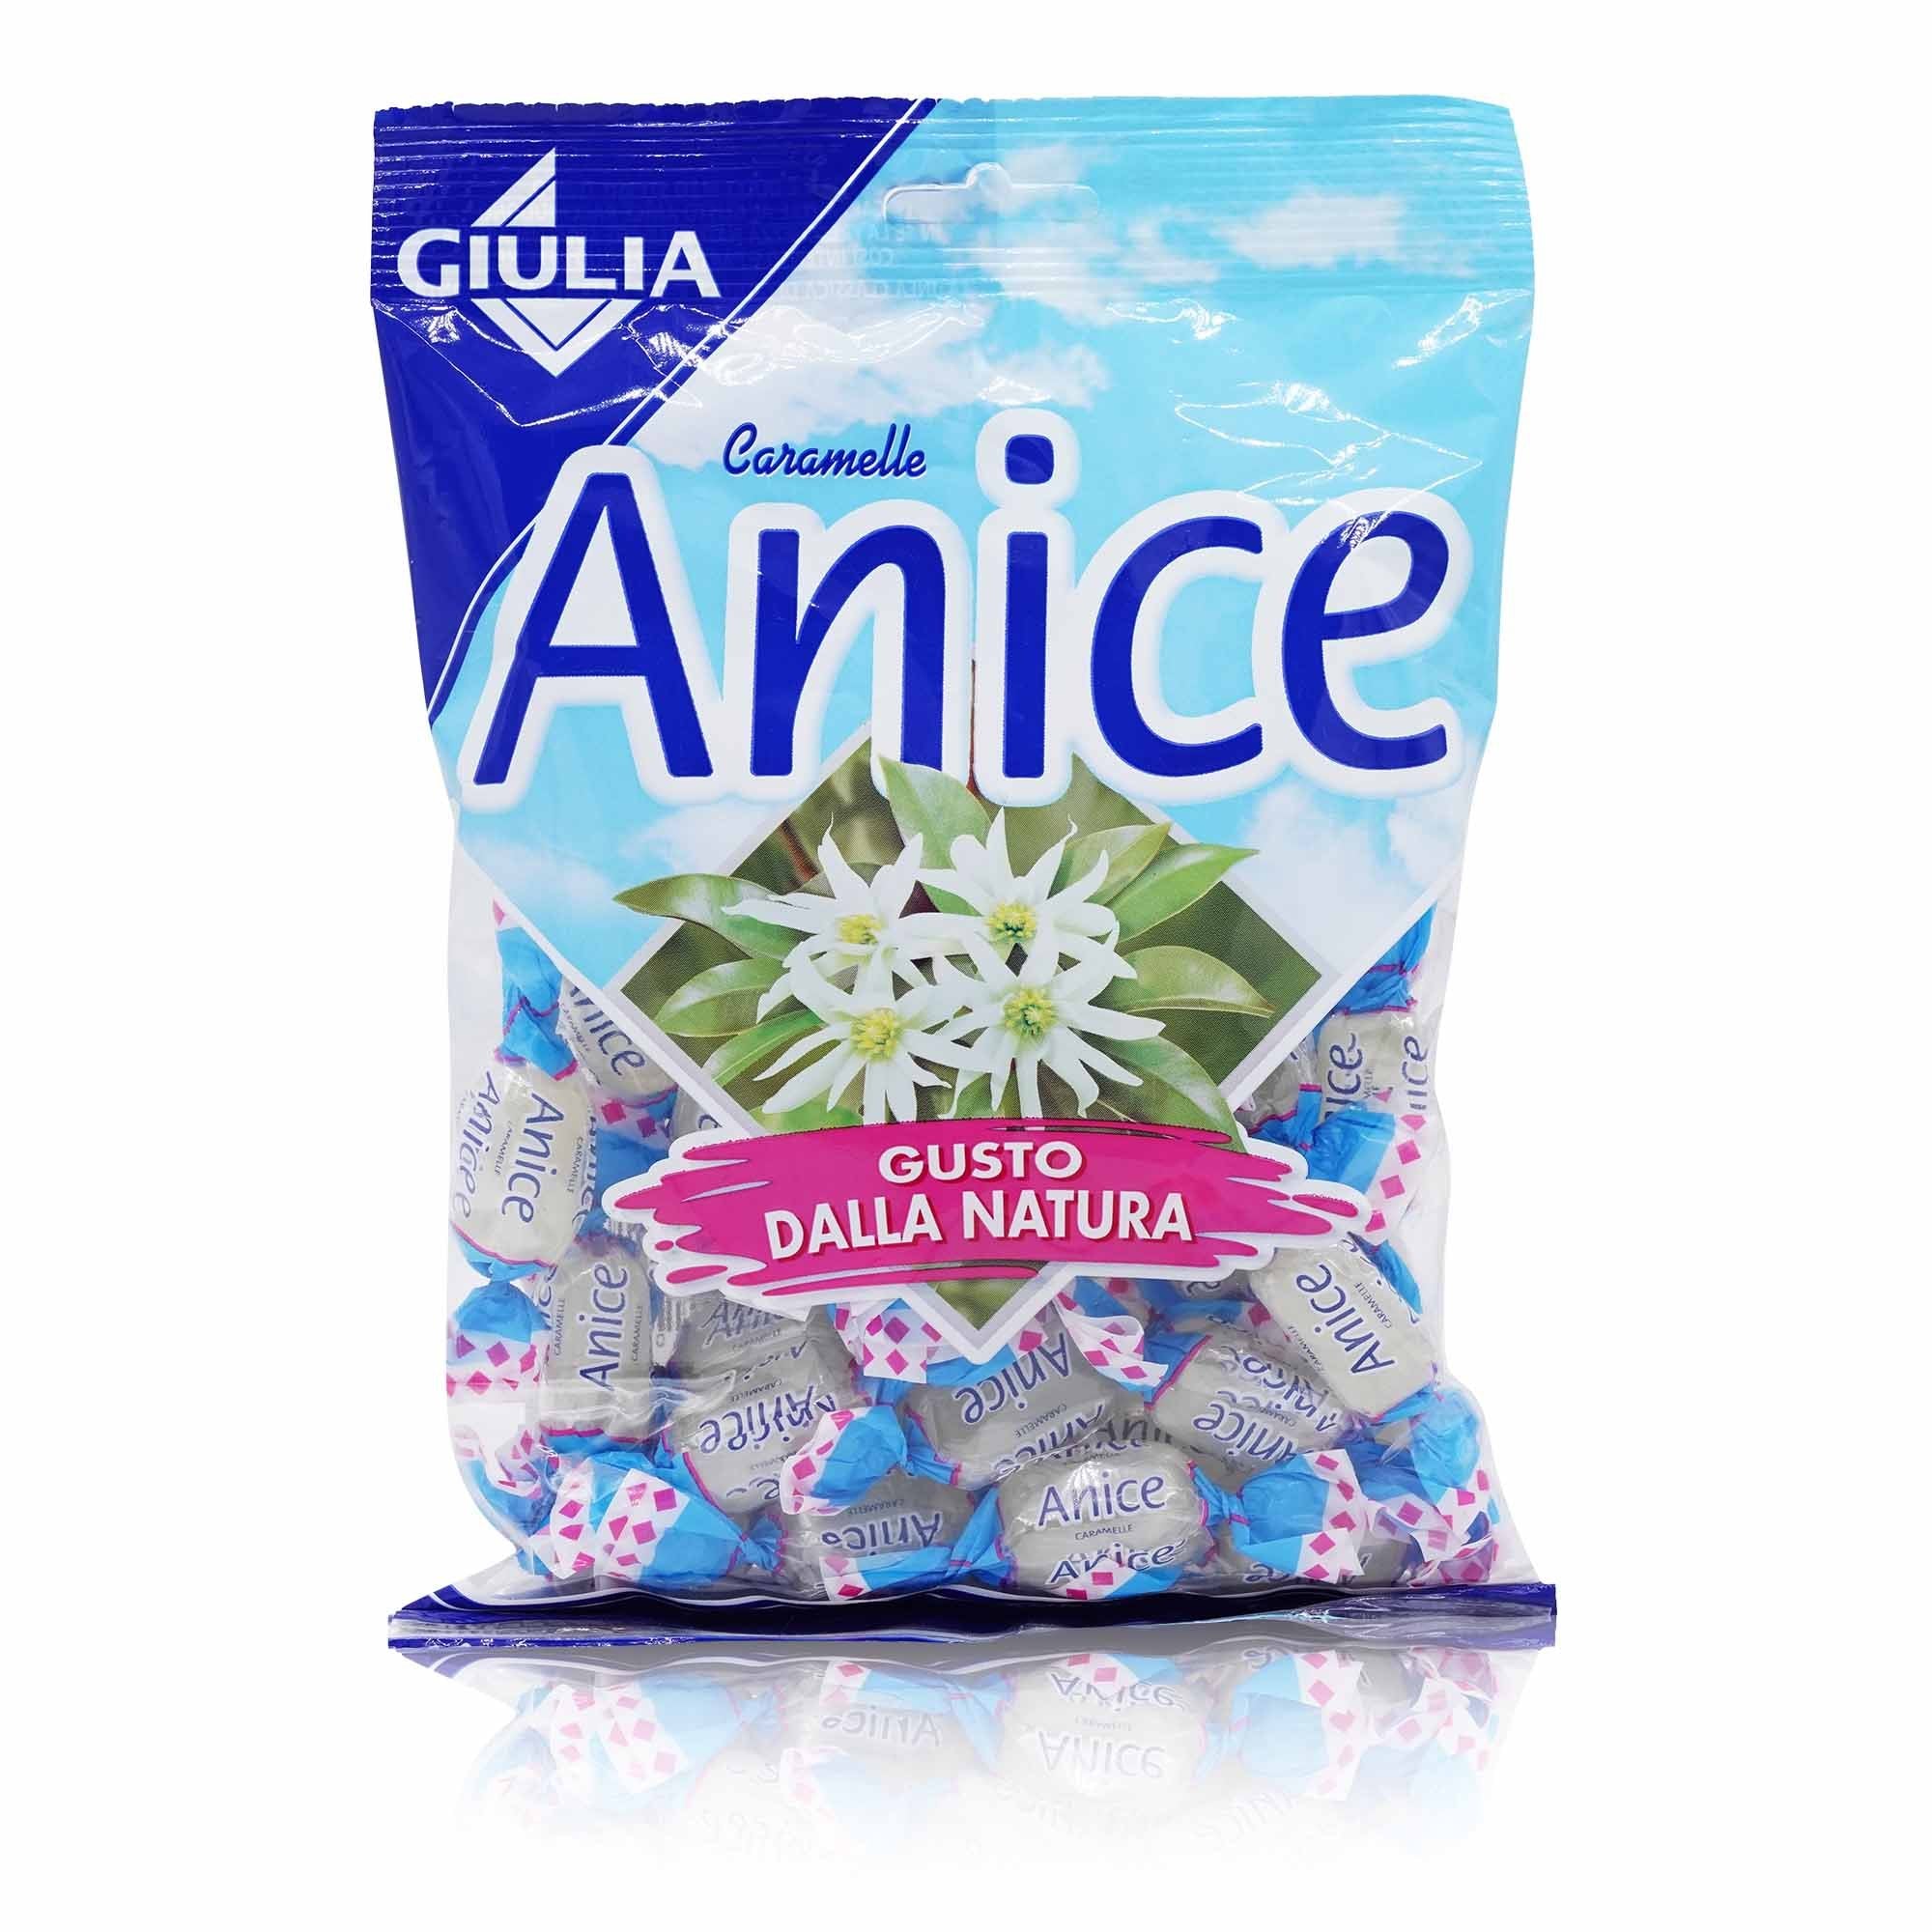 GIULIA Caramelle Anice – Bonbons Anis - 0,200kg